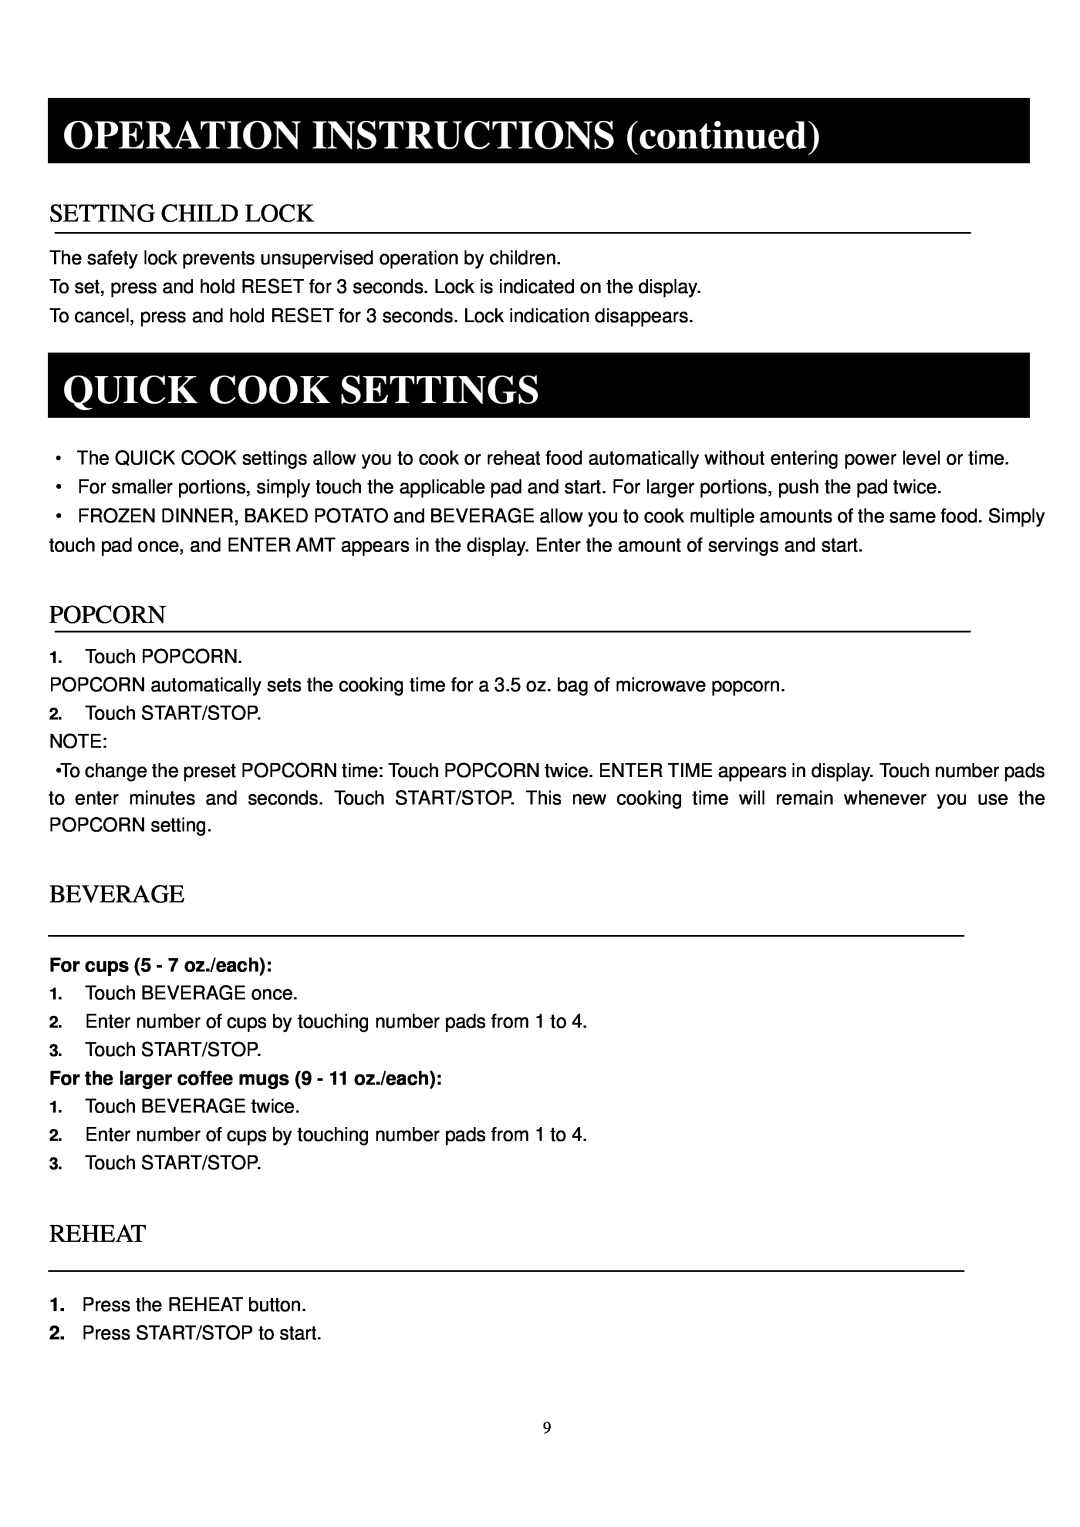 Sunbeam SGC7701 manual Quick Cook Settings, Setting Child Lock, Popcorn, Beverage, Reheat, OPERATION INSTRUCTIONS continued 